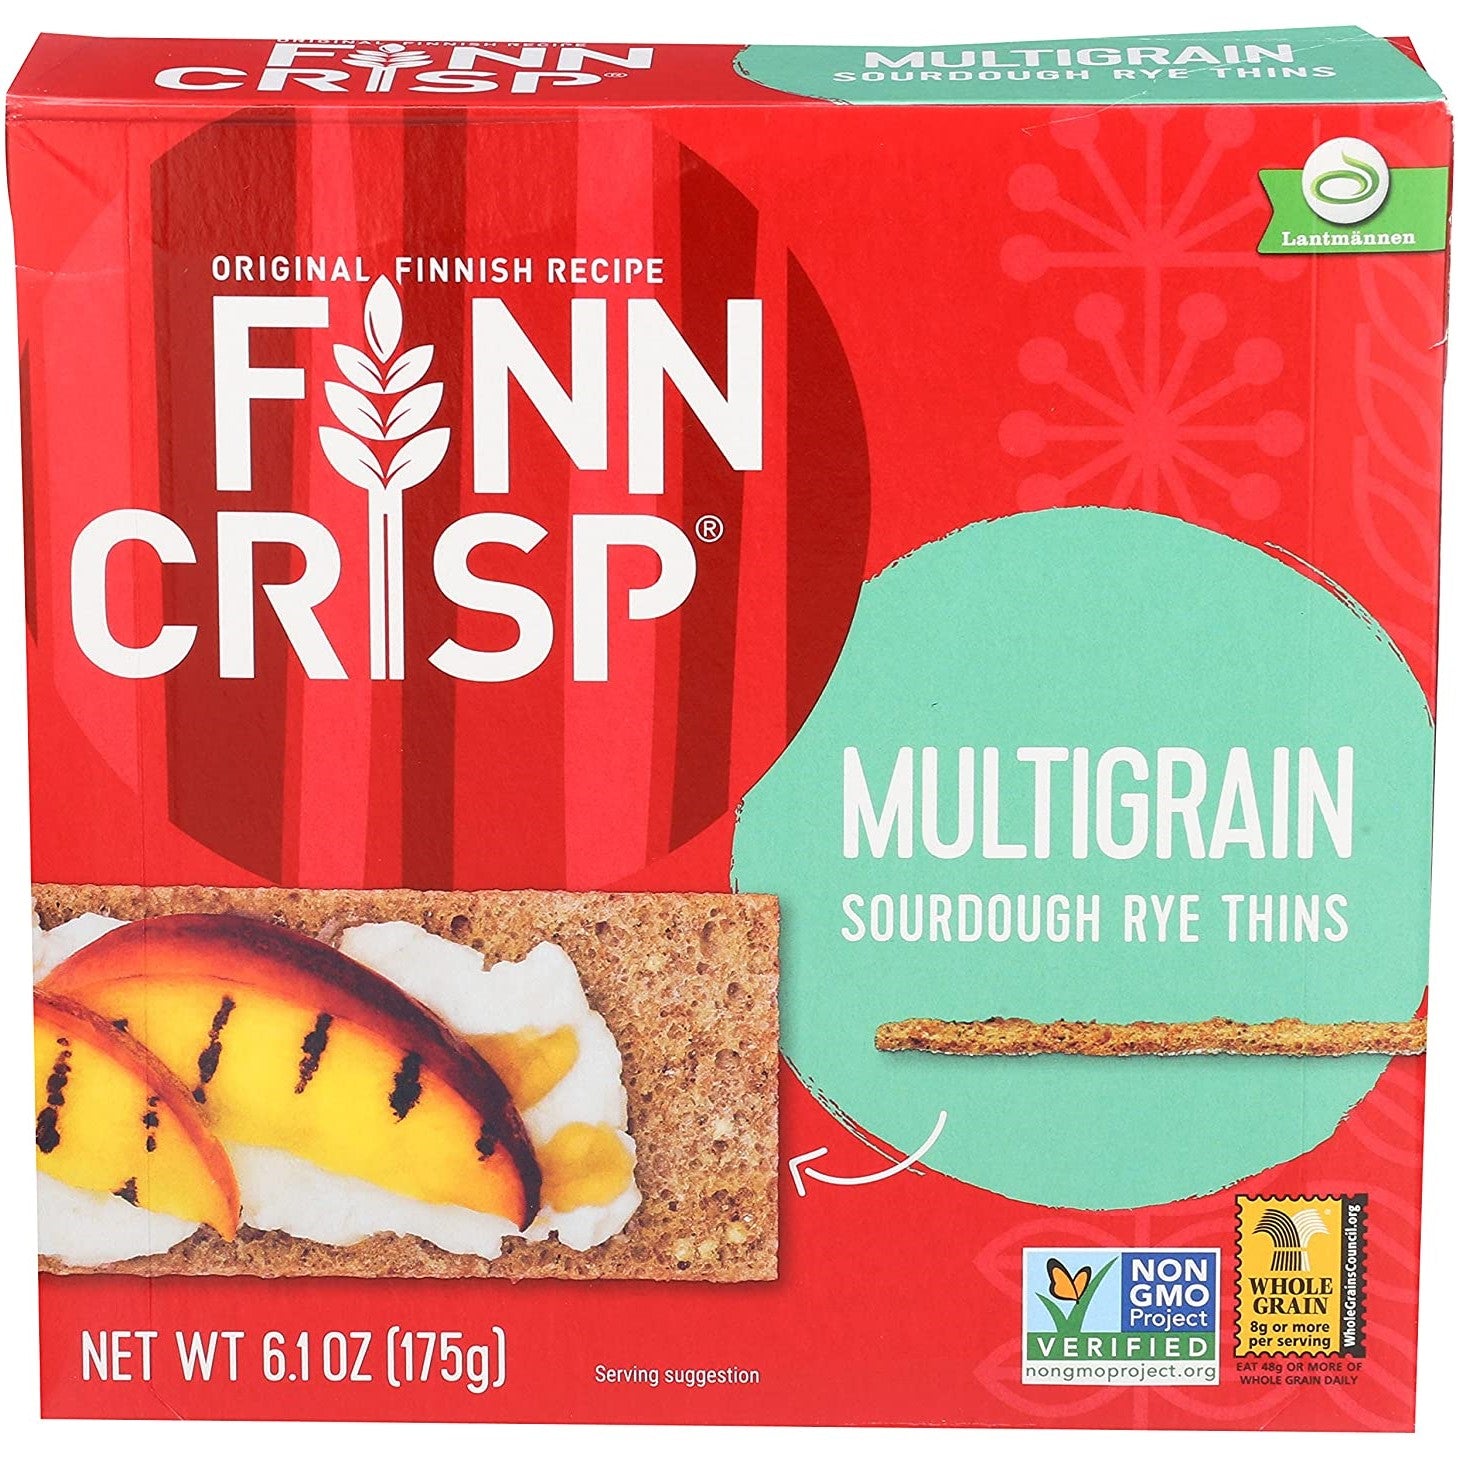 Finn Crisp Multigrain, 7oz – Cook Swedish